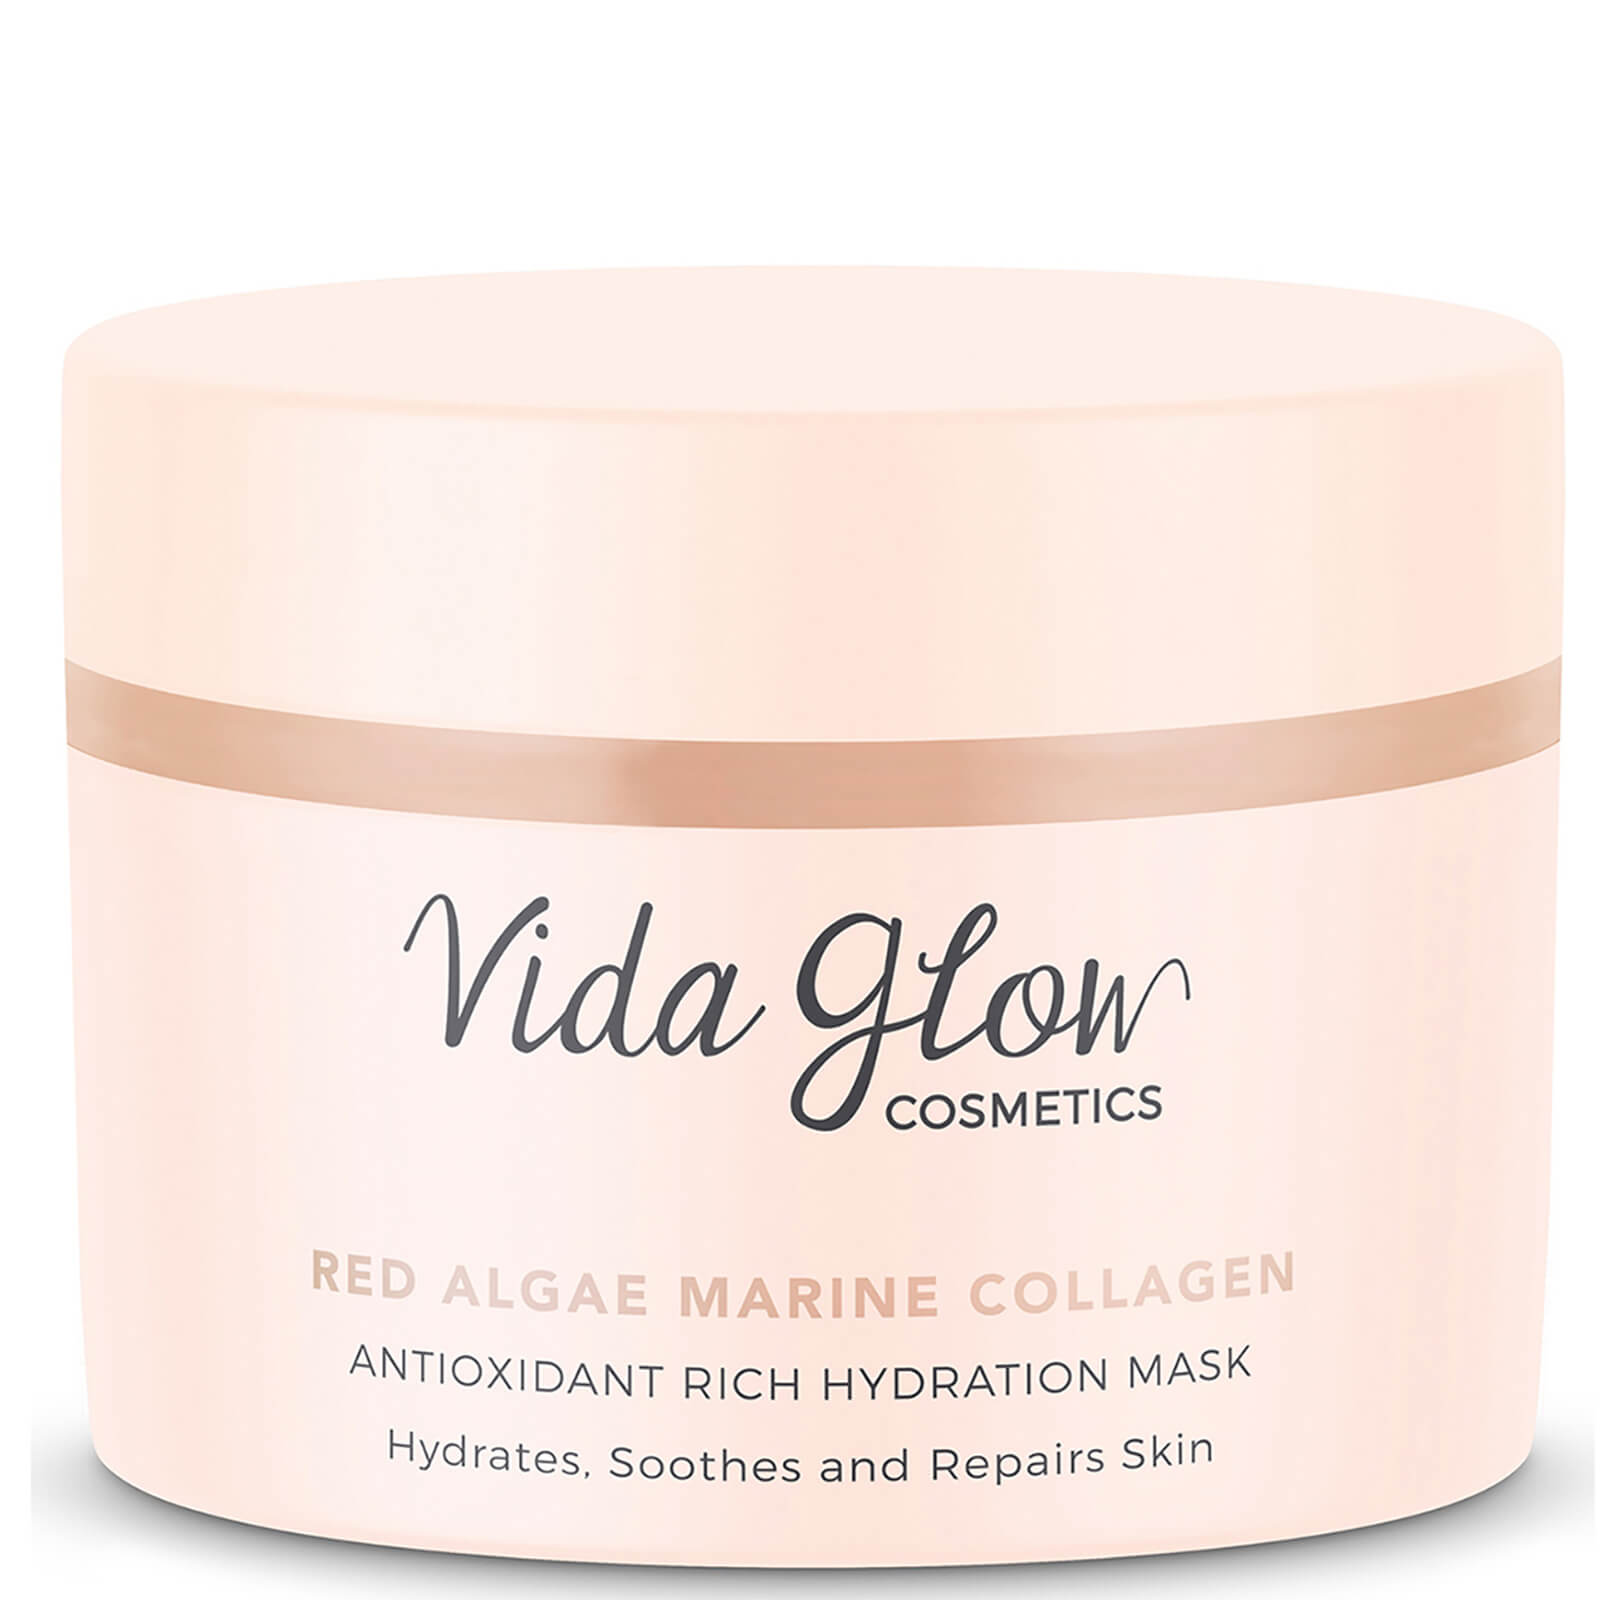 Vida Glow Marine Collagen Hydration Mask 50ml